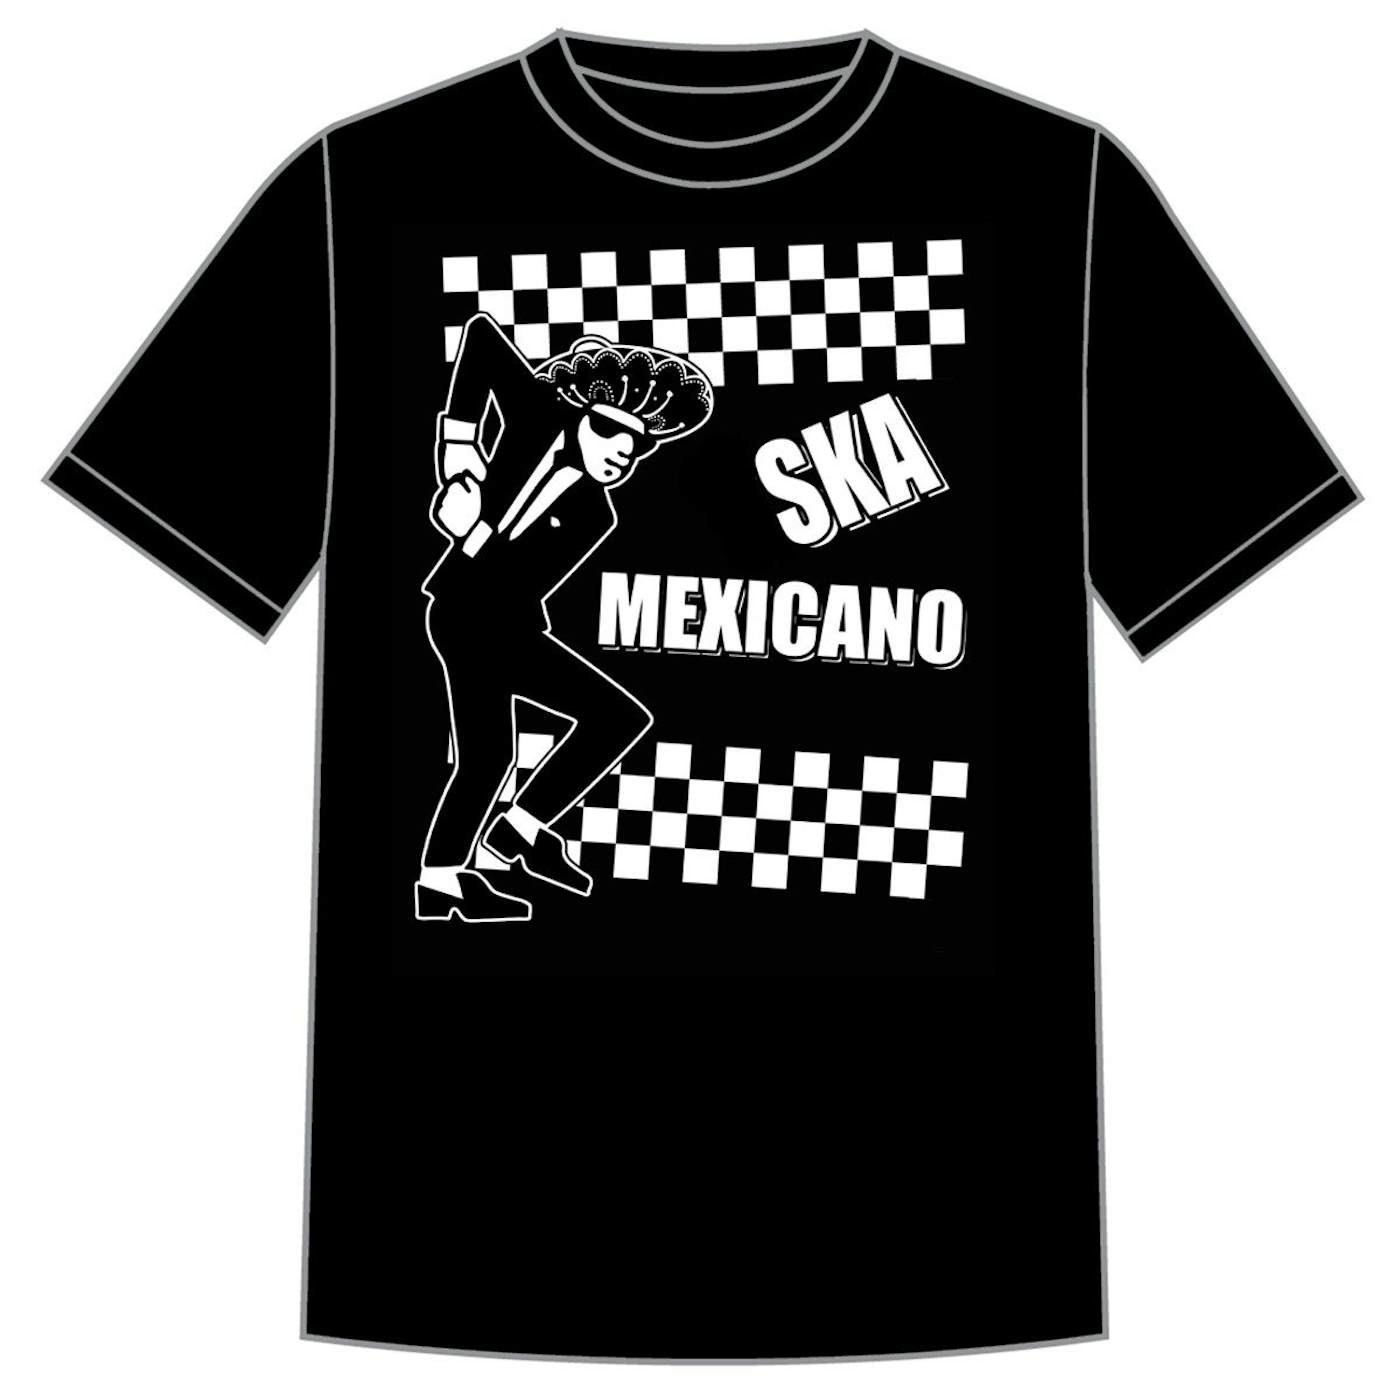 Road Dog Merch Ska Mexicano Shirt